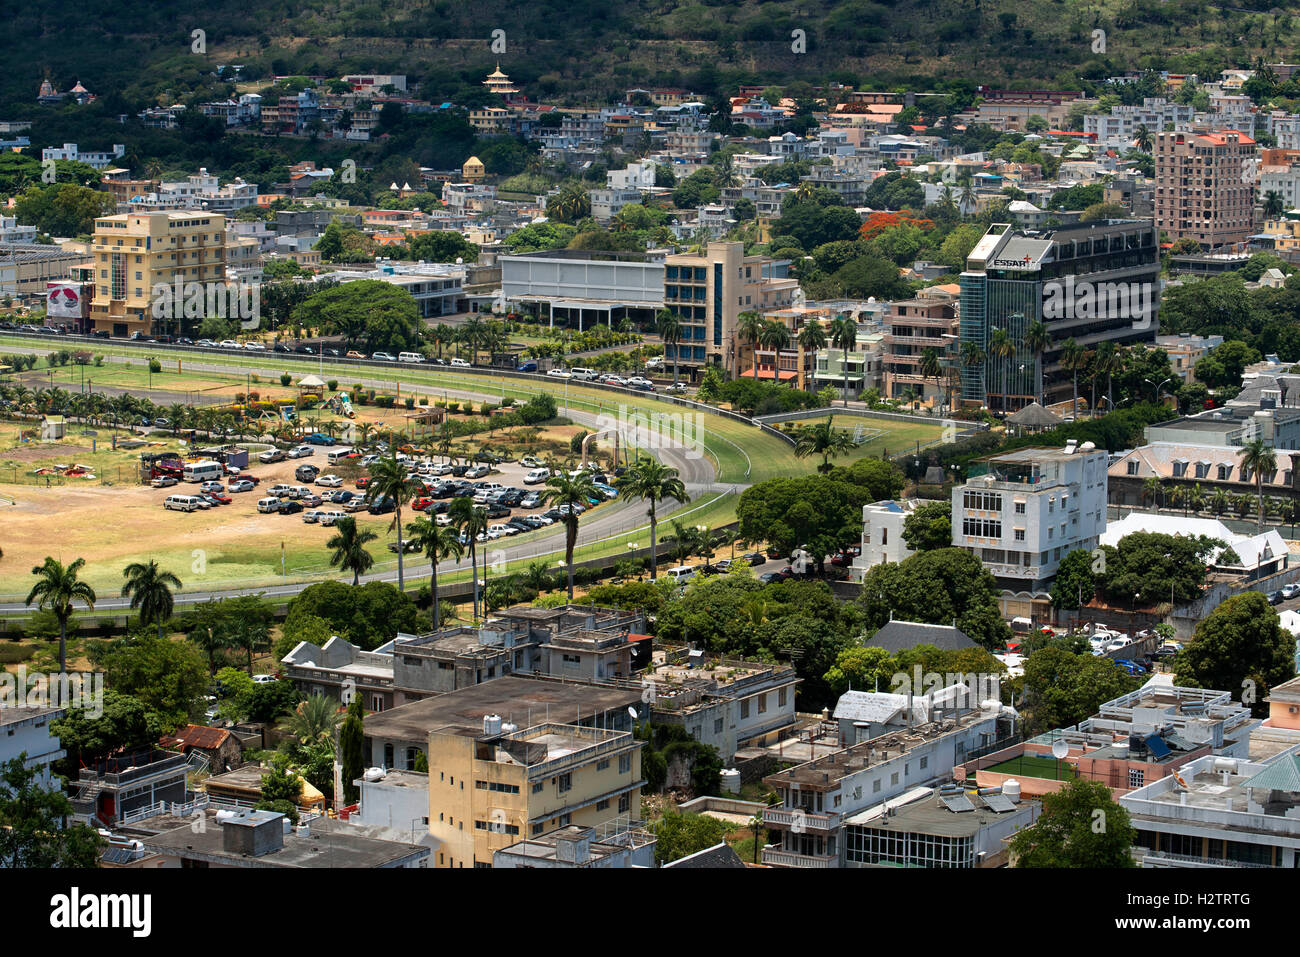 Das Champ de Mars Race Course, Blick von der Zitadelle, Port Louis, Mauritius. Stockfoto